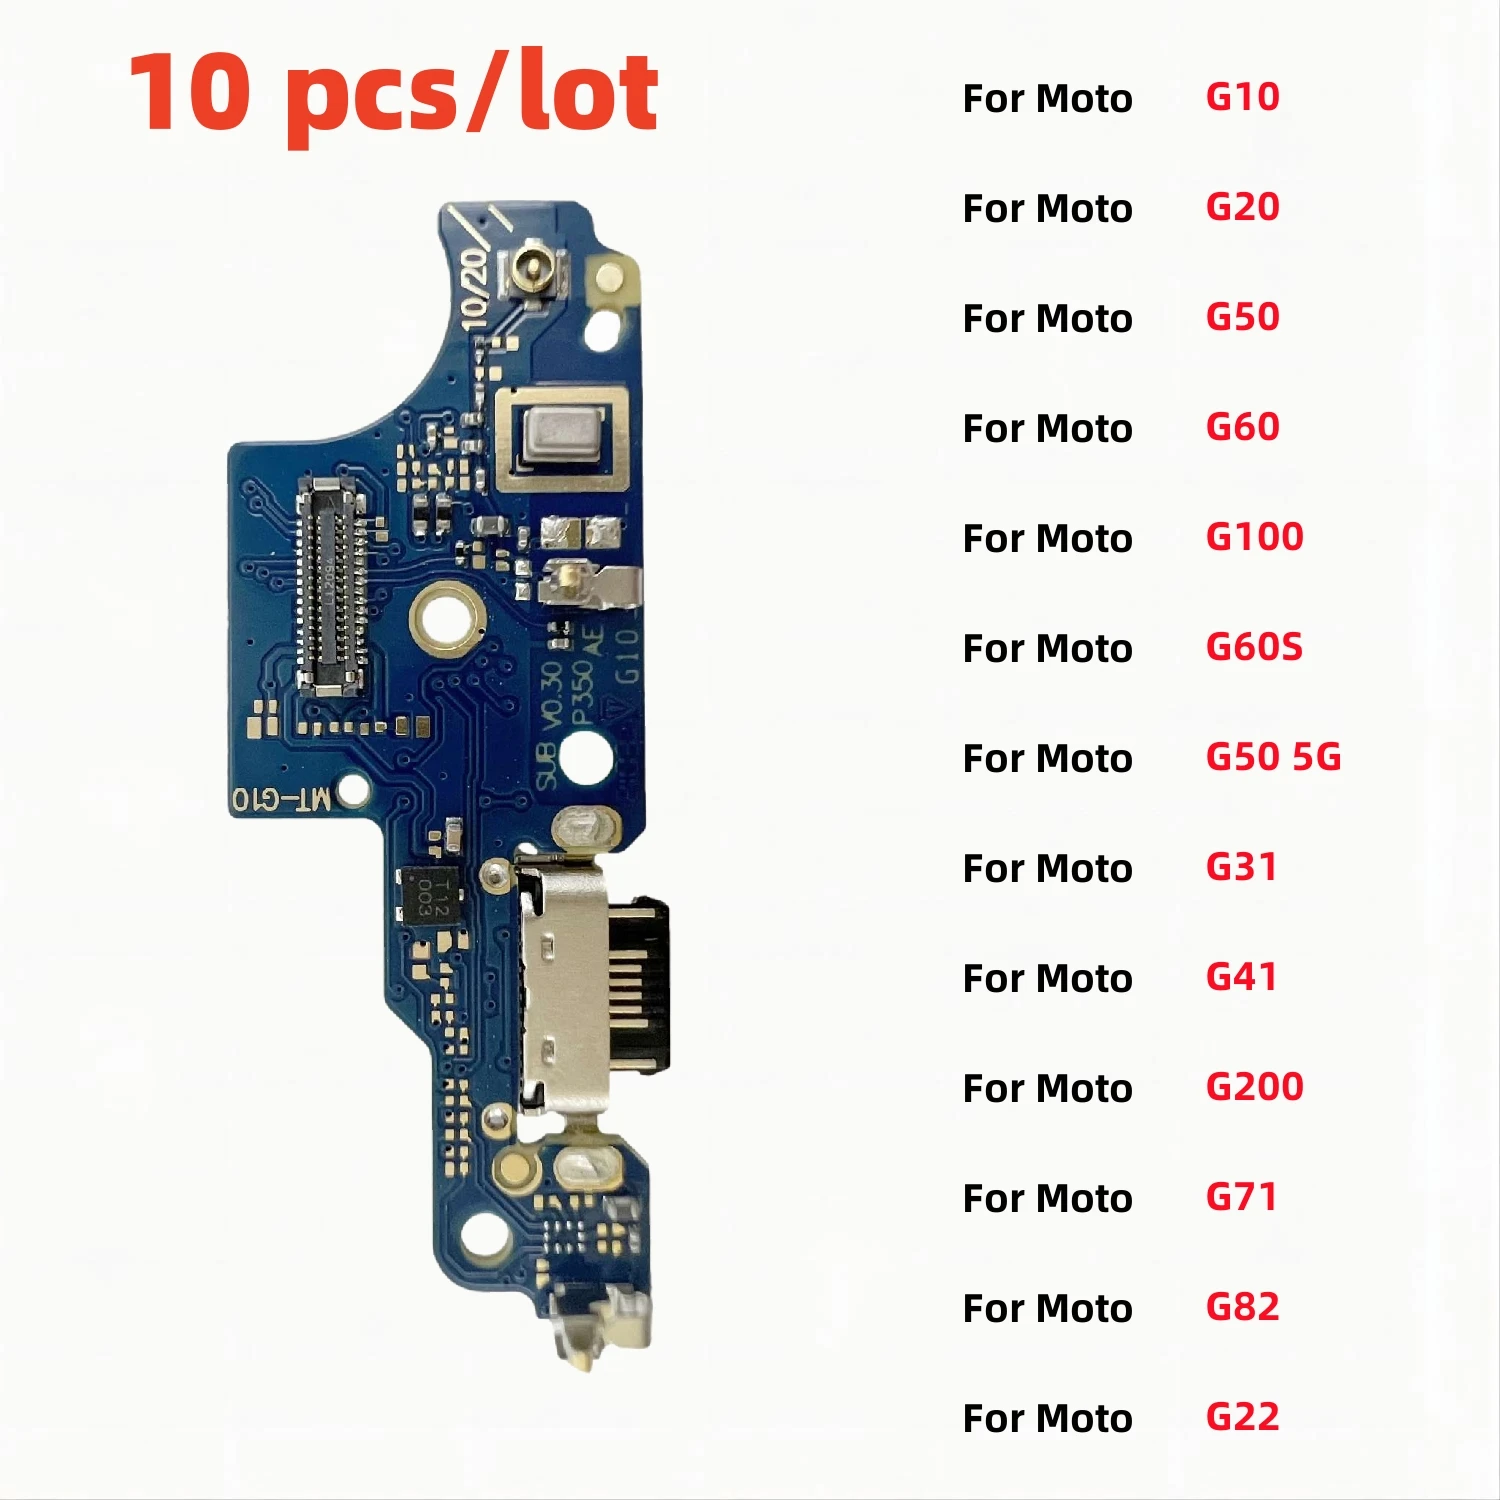 

10 Pcs/Lot USB Charger Connector Charging Port Flex Cable For Motorola Moto G10 G20 G50 G60 G60s G100 G31 G41 G71 G82 G22 G200